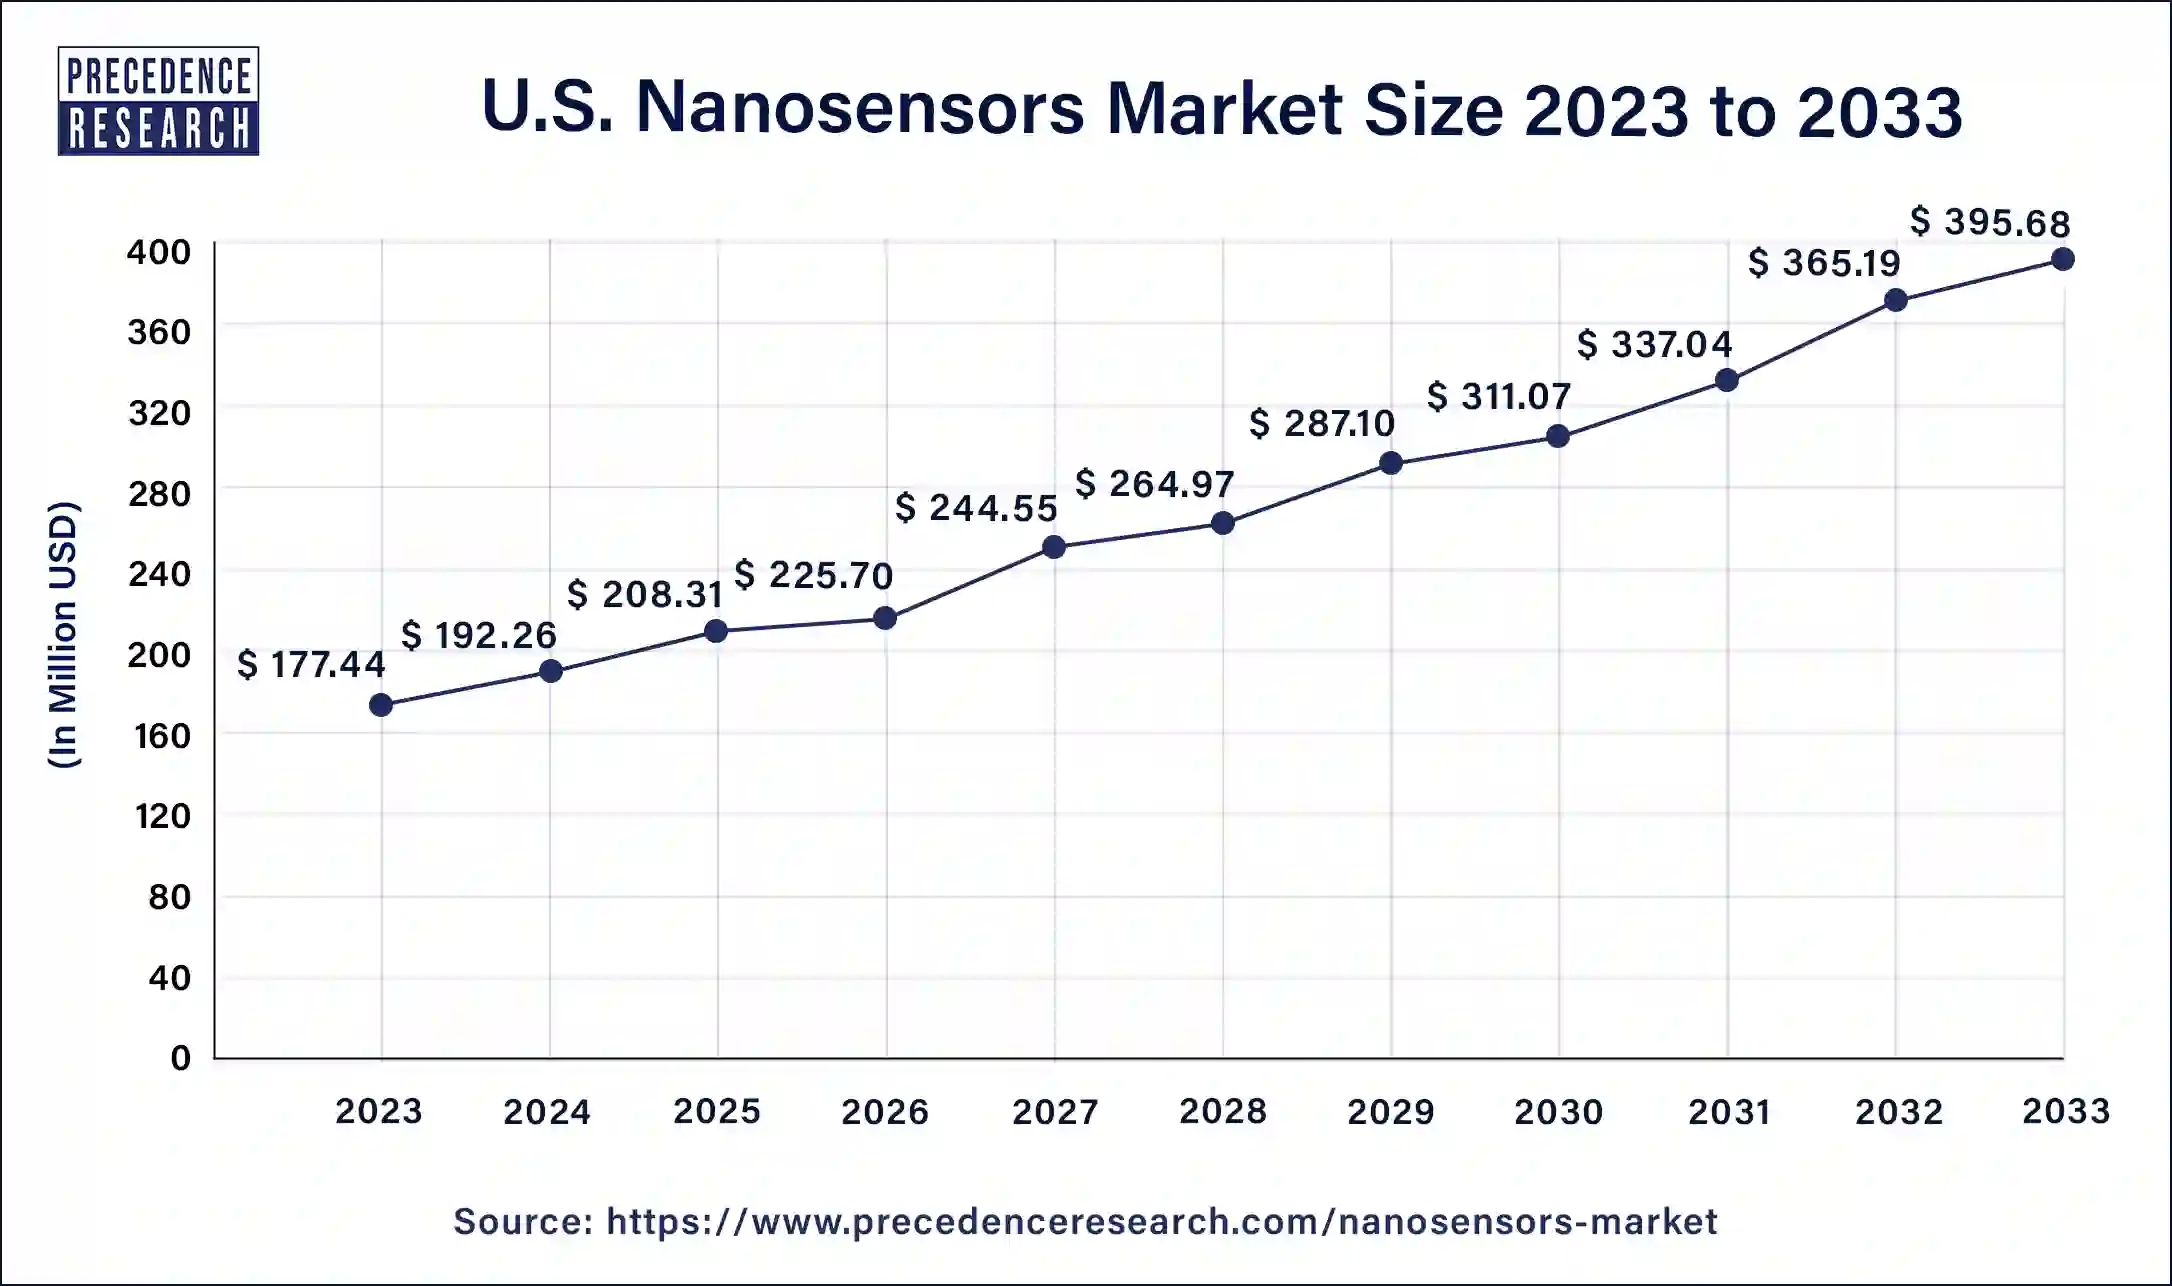 U.S. Nanosensors Market Size 2024 to 2033